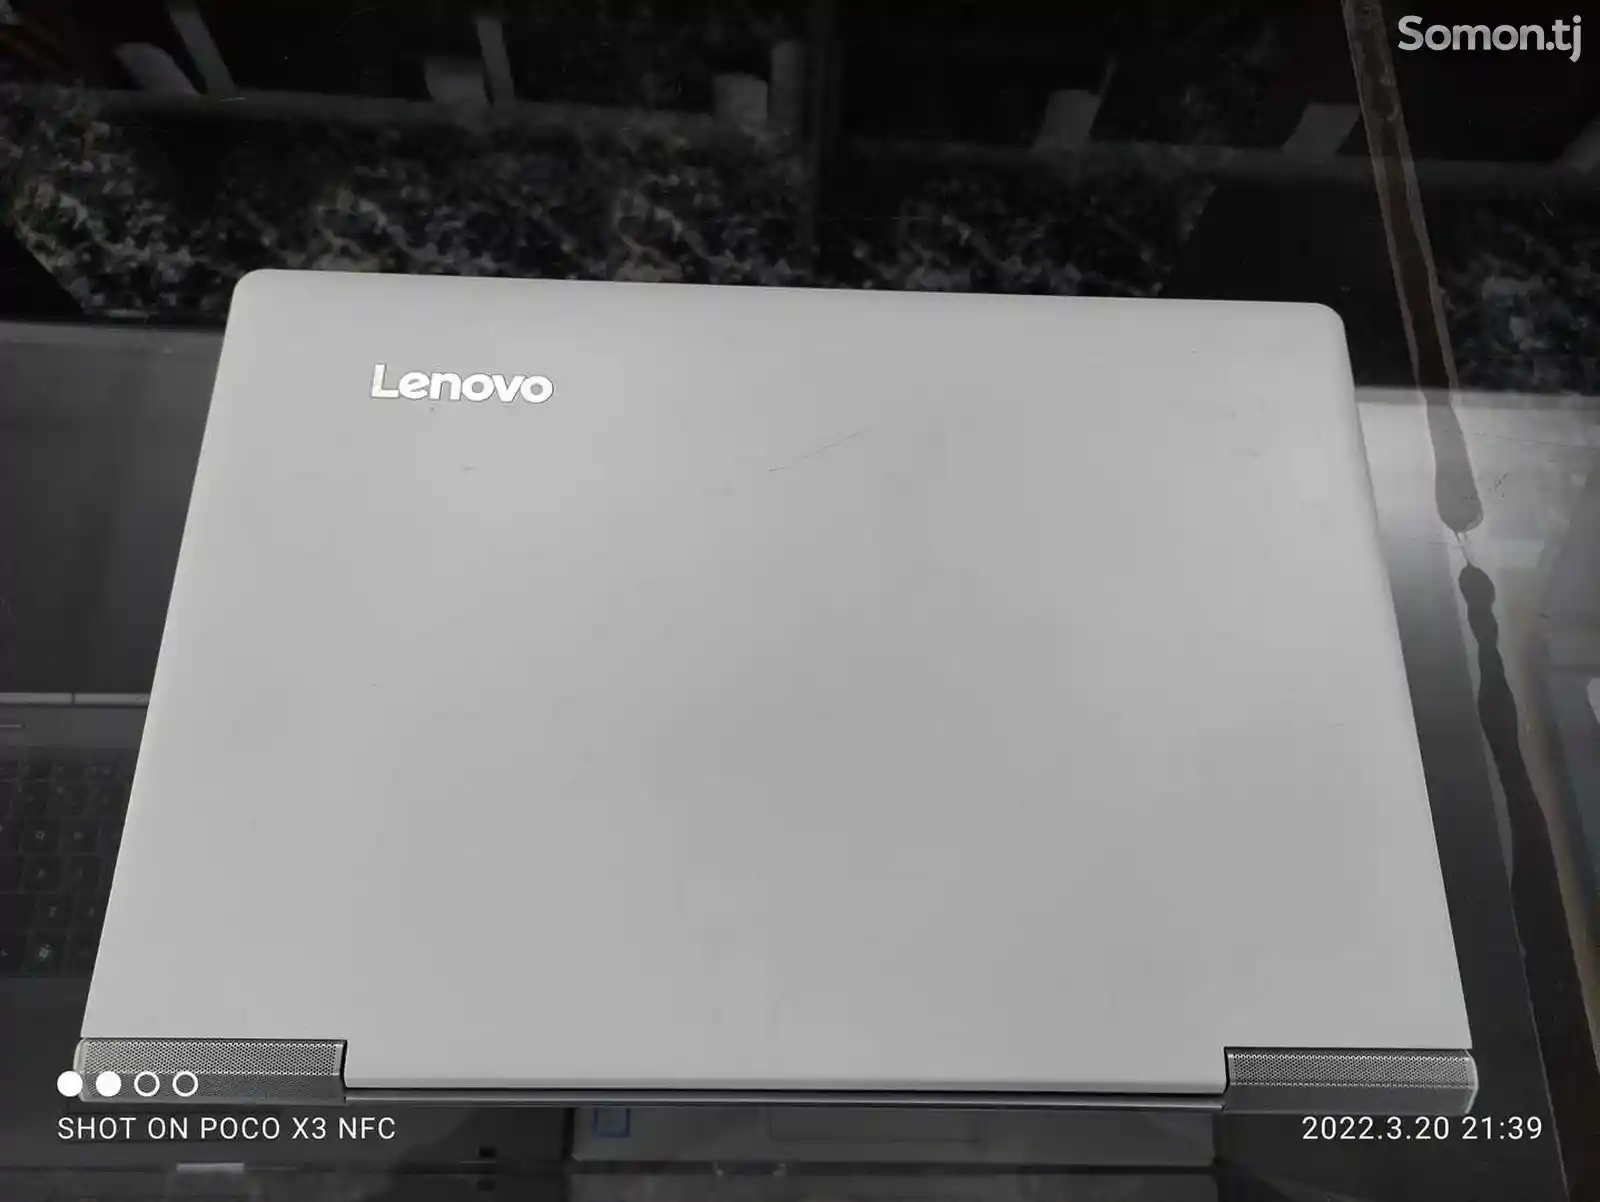 Игровой Ноутбук Lenovo Ideapad 700 Core i7-6700HQ GTX 950M 2GB-7